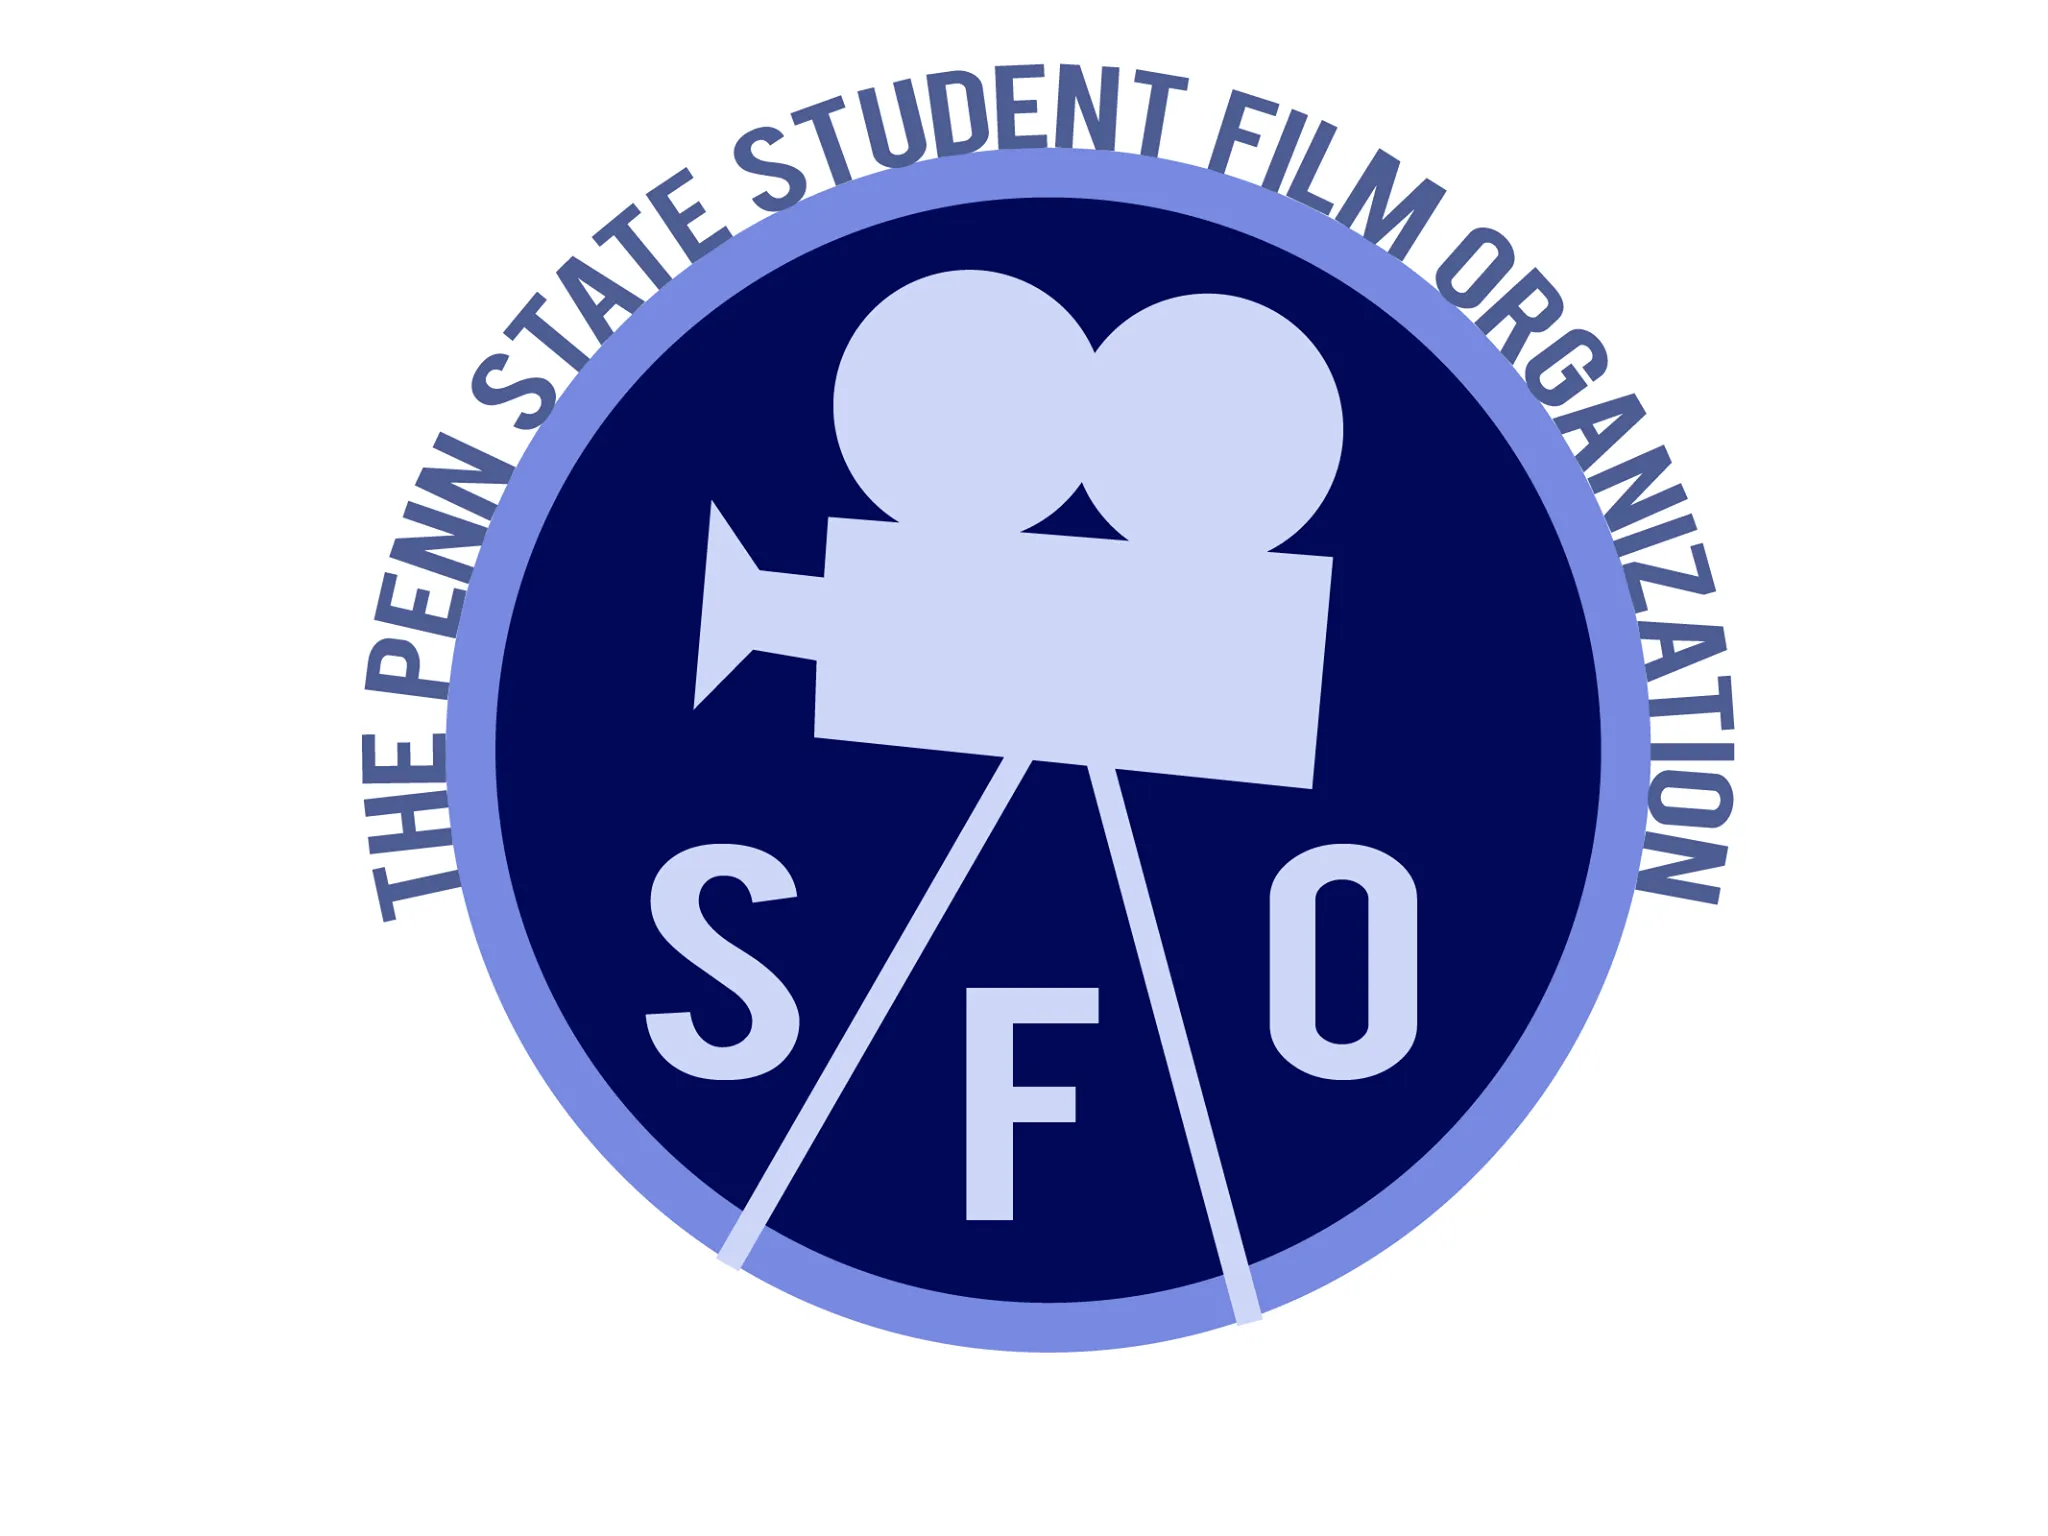 The Penn State Student Film Organization